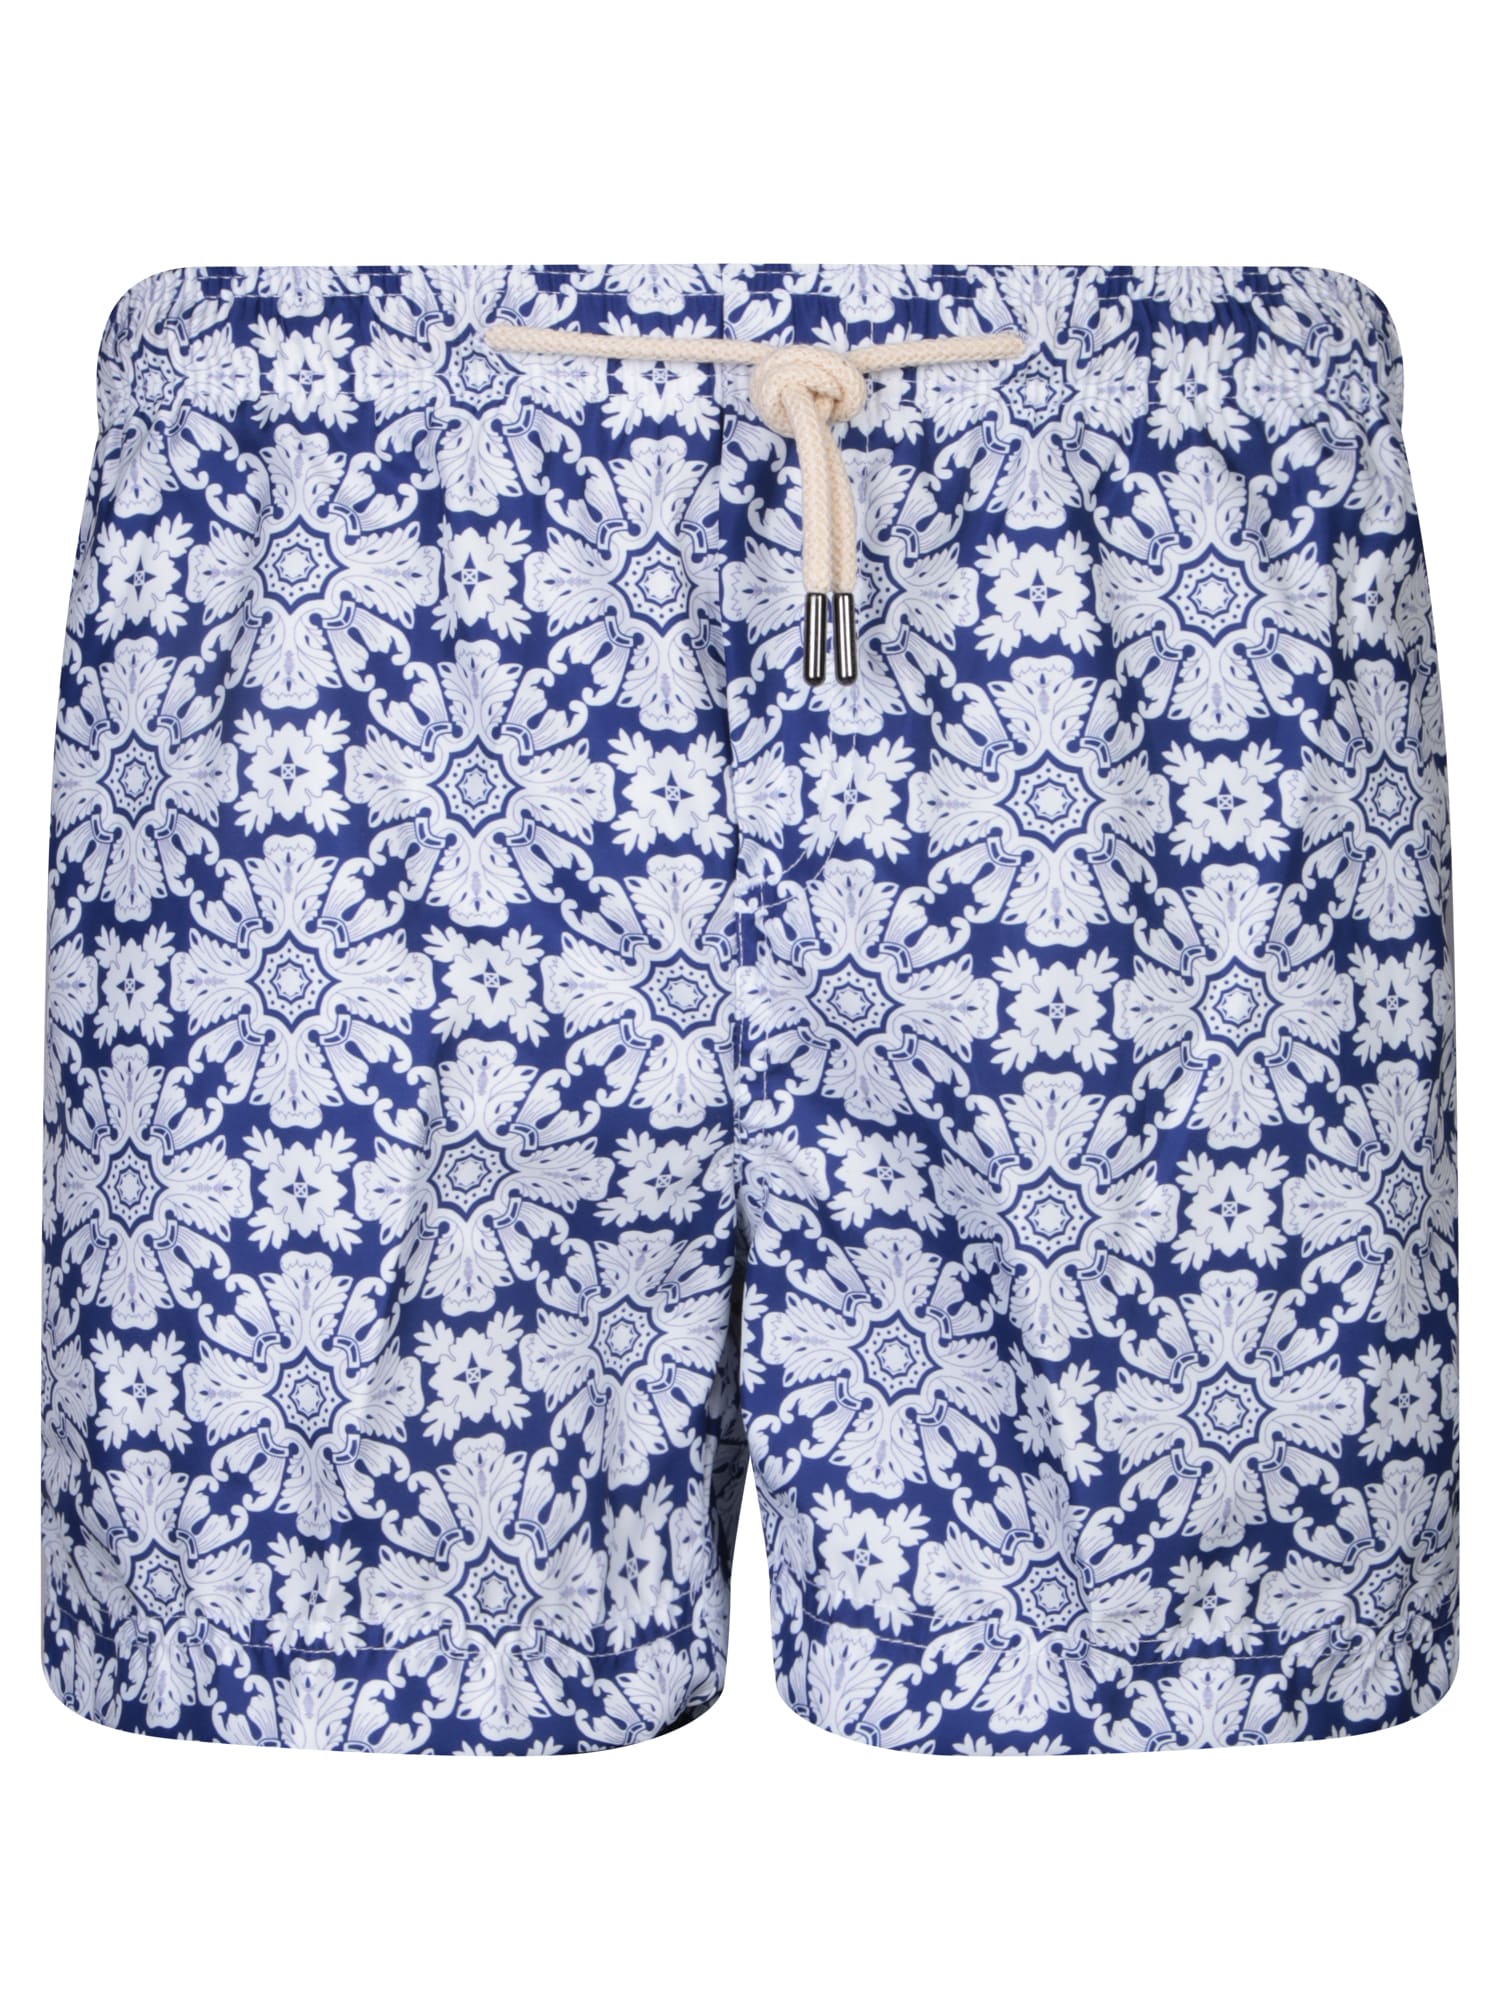 Floral Pattern Swim Shorts White/blue By Peninsula